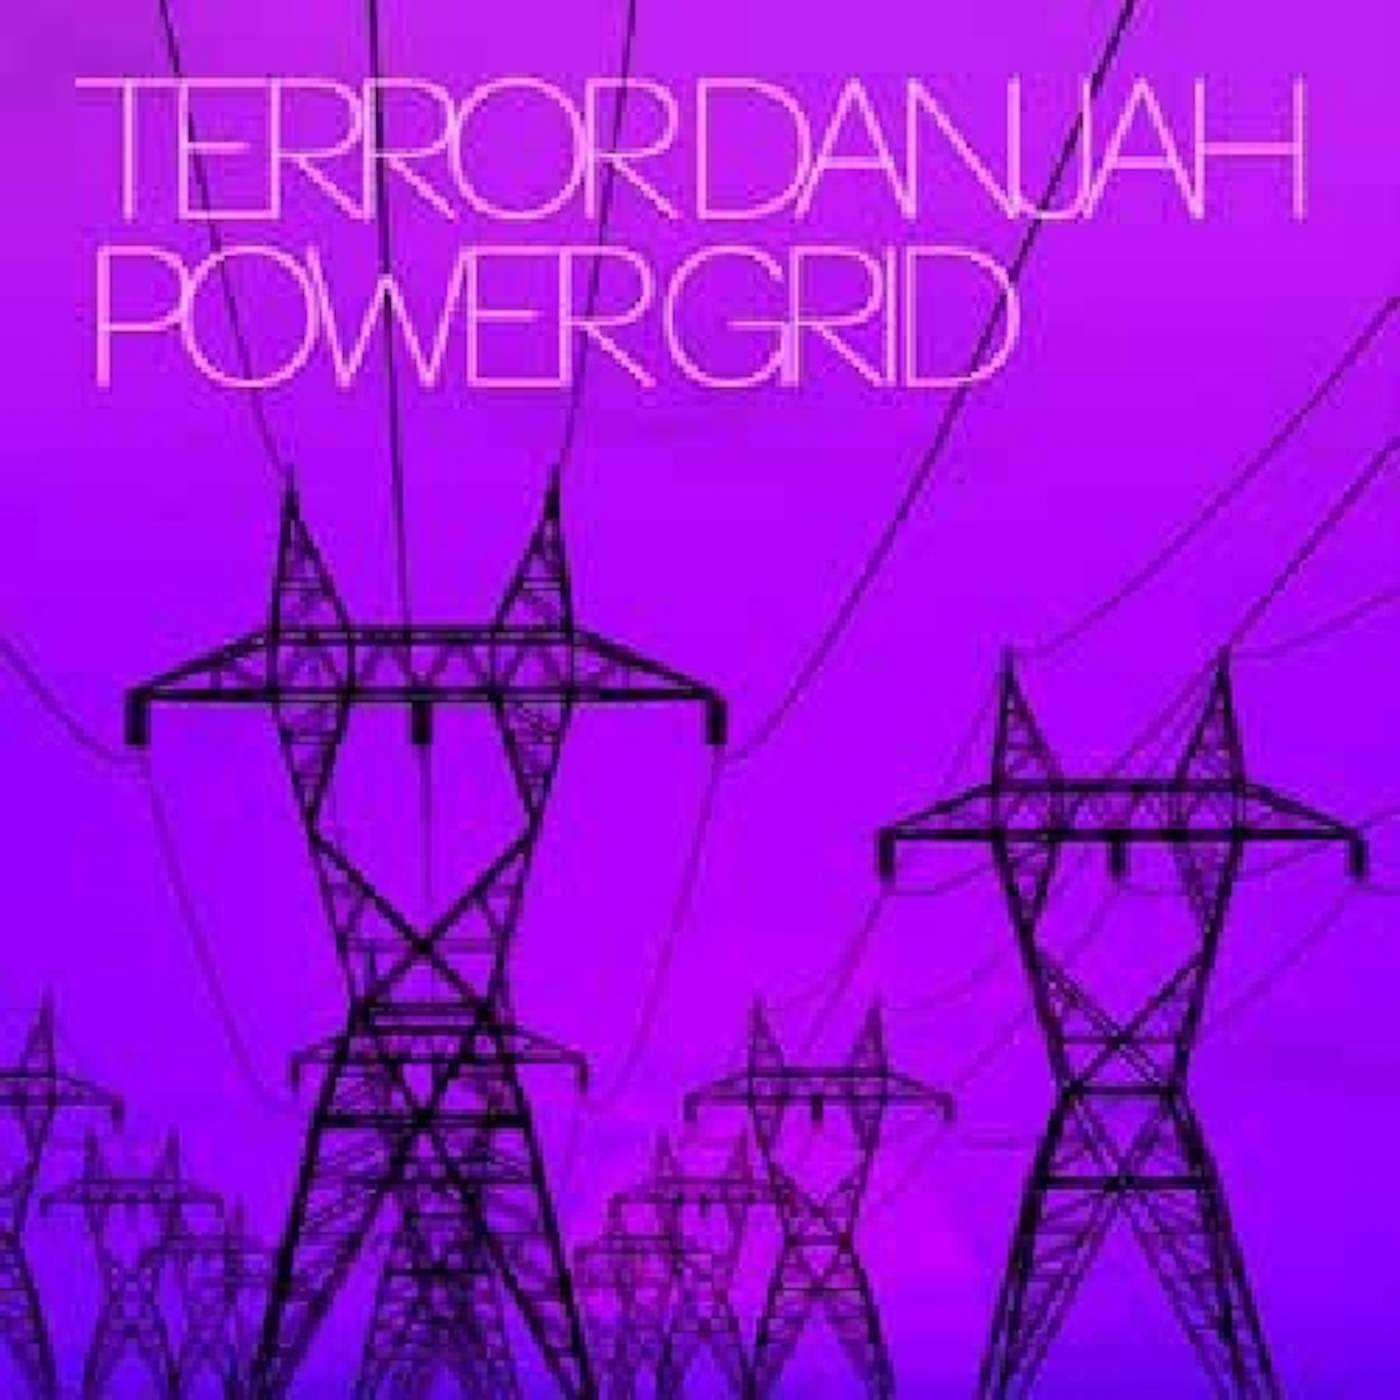 Terror Danjah Power Grid Vinyl Record